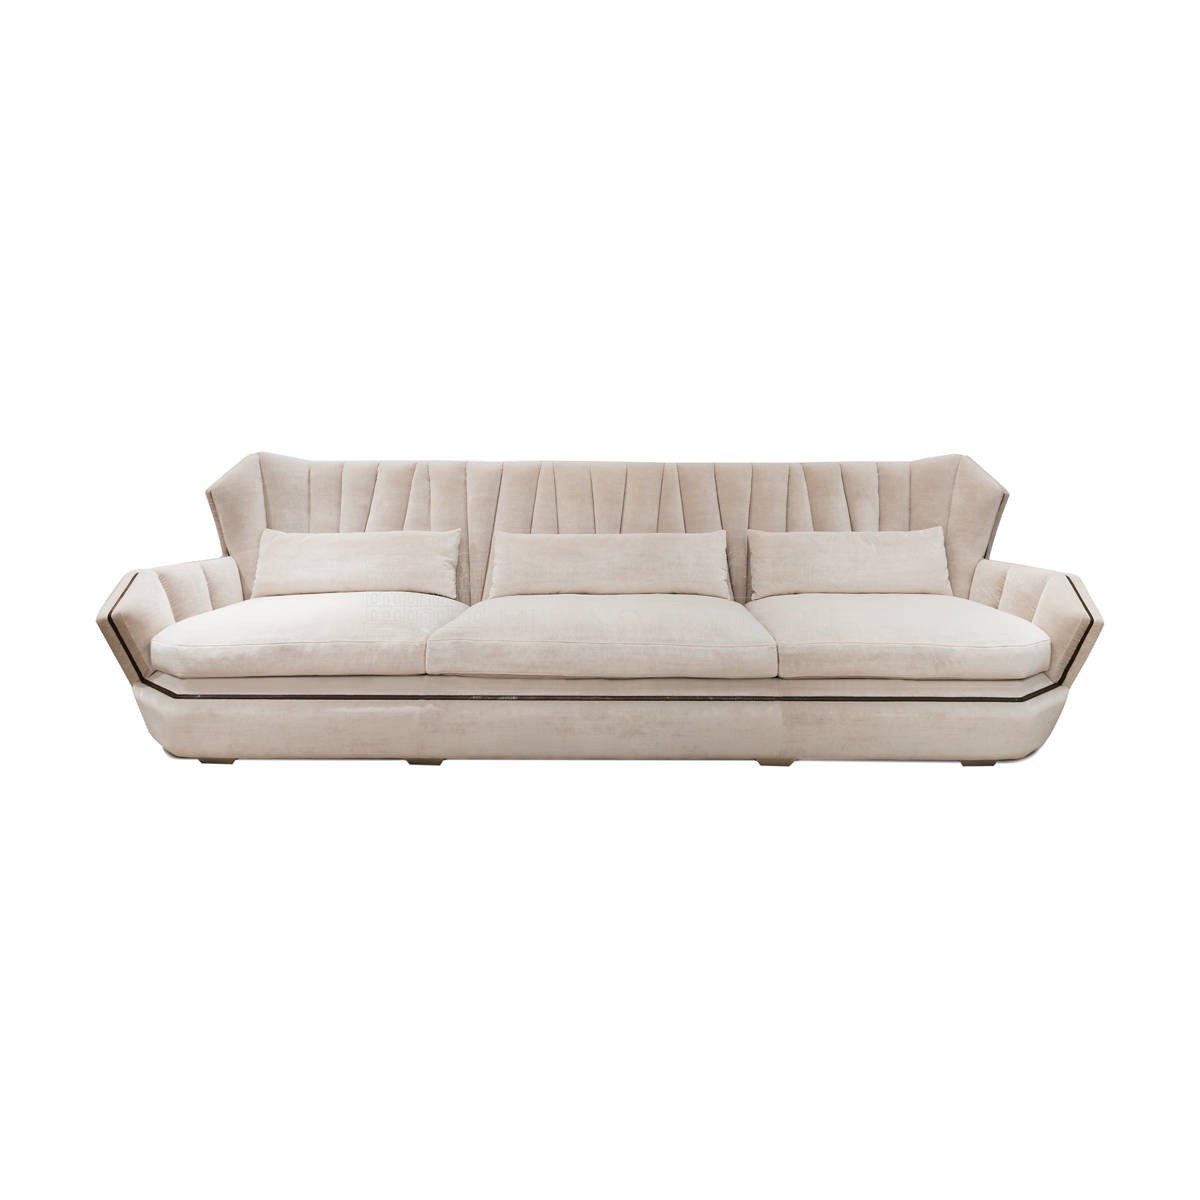 Прямой диван Hemingway sofa из Италии фабрики IPE CAVALLI VISIONNAIRE